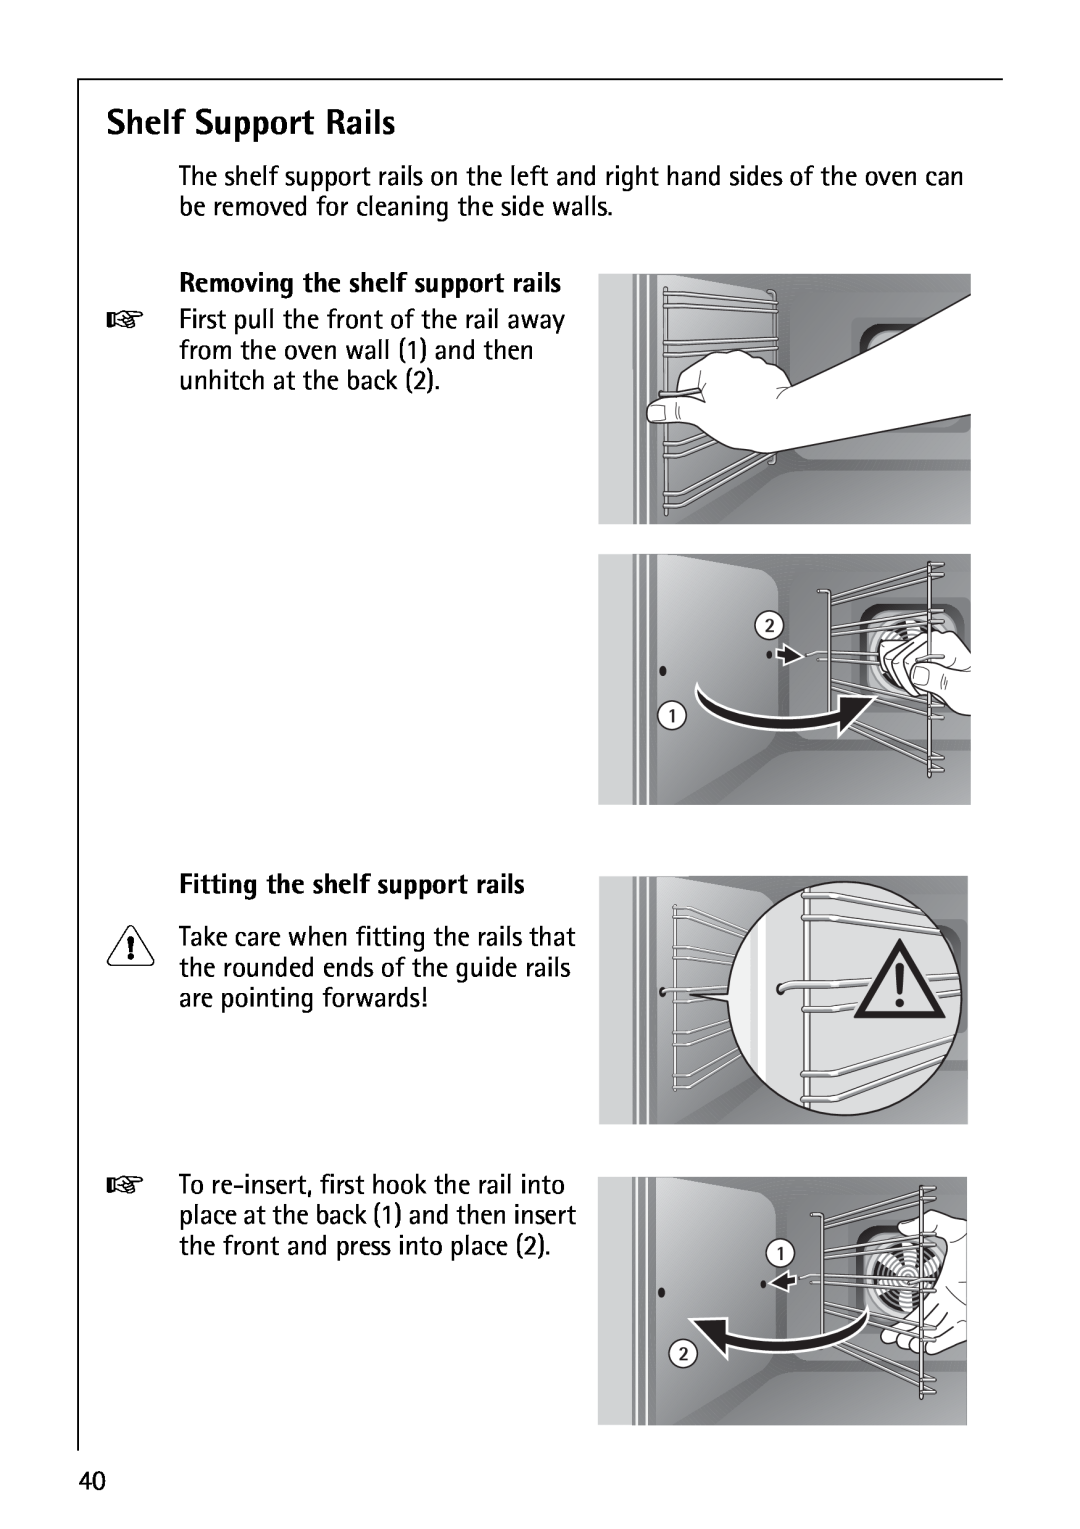 AEG E3100-1 manual Shelf Support Rails, Removing the shelf support rails, Fitting the shelf support rails 